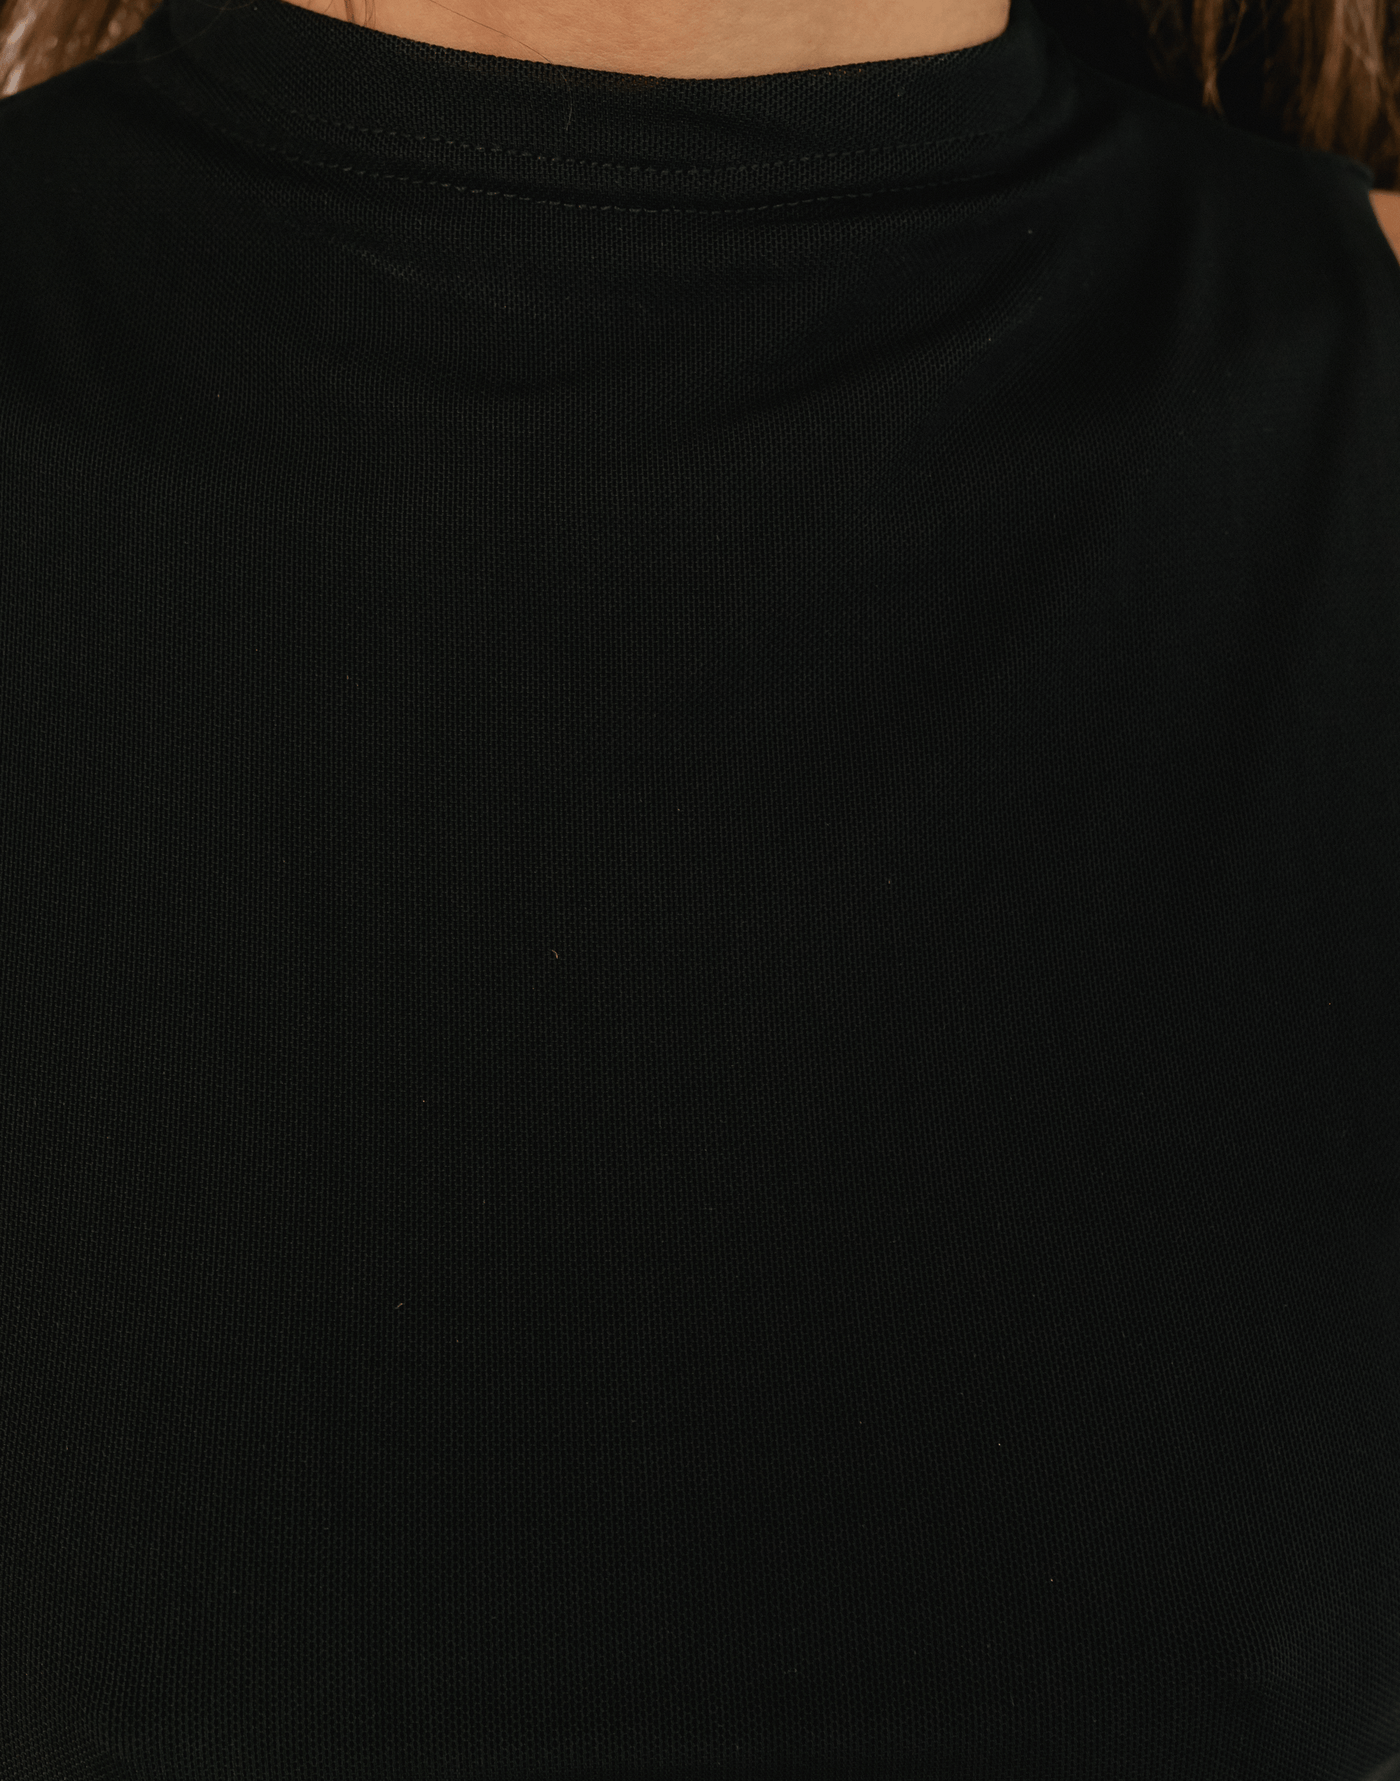 Press Pass Mesh Mini Dress (Black) - High Neck Mesh Mini Dress - Women's Dress - Charcoal Clothing